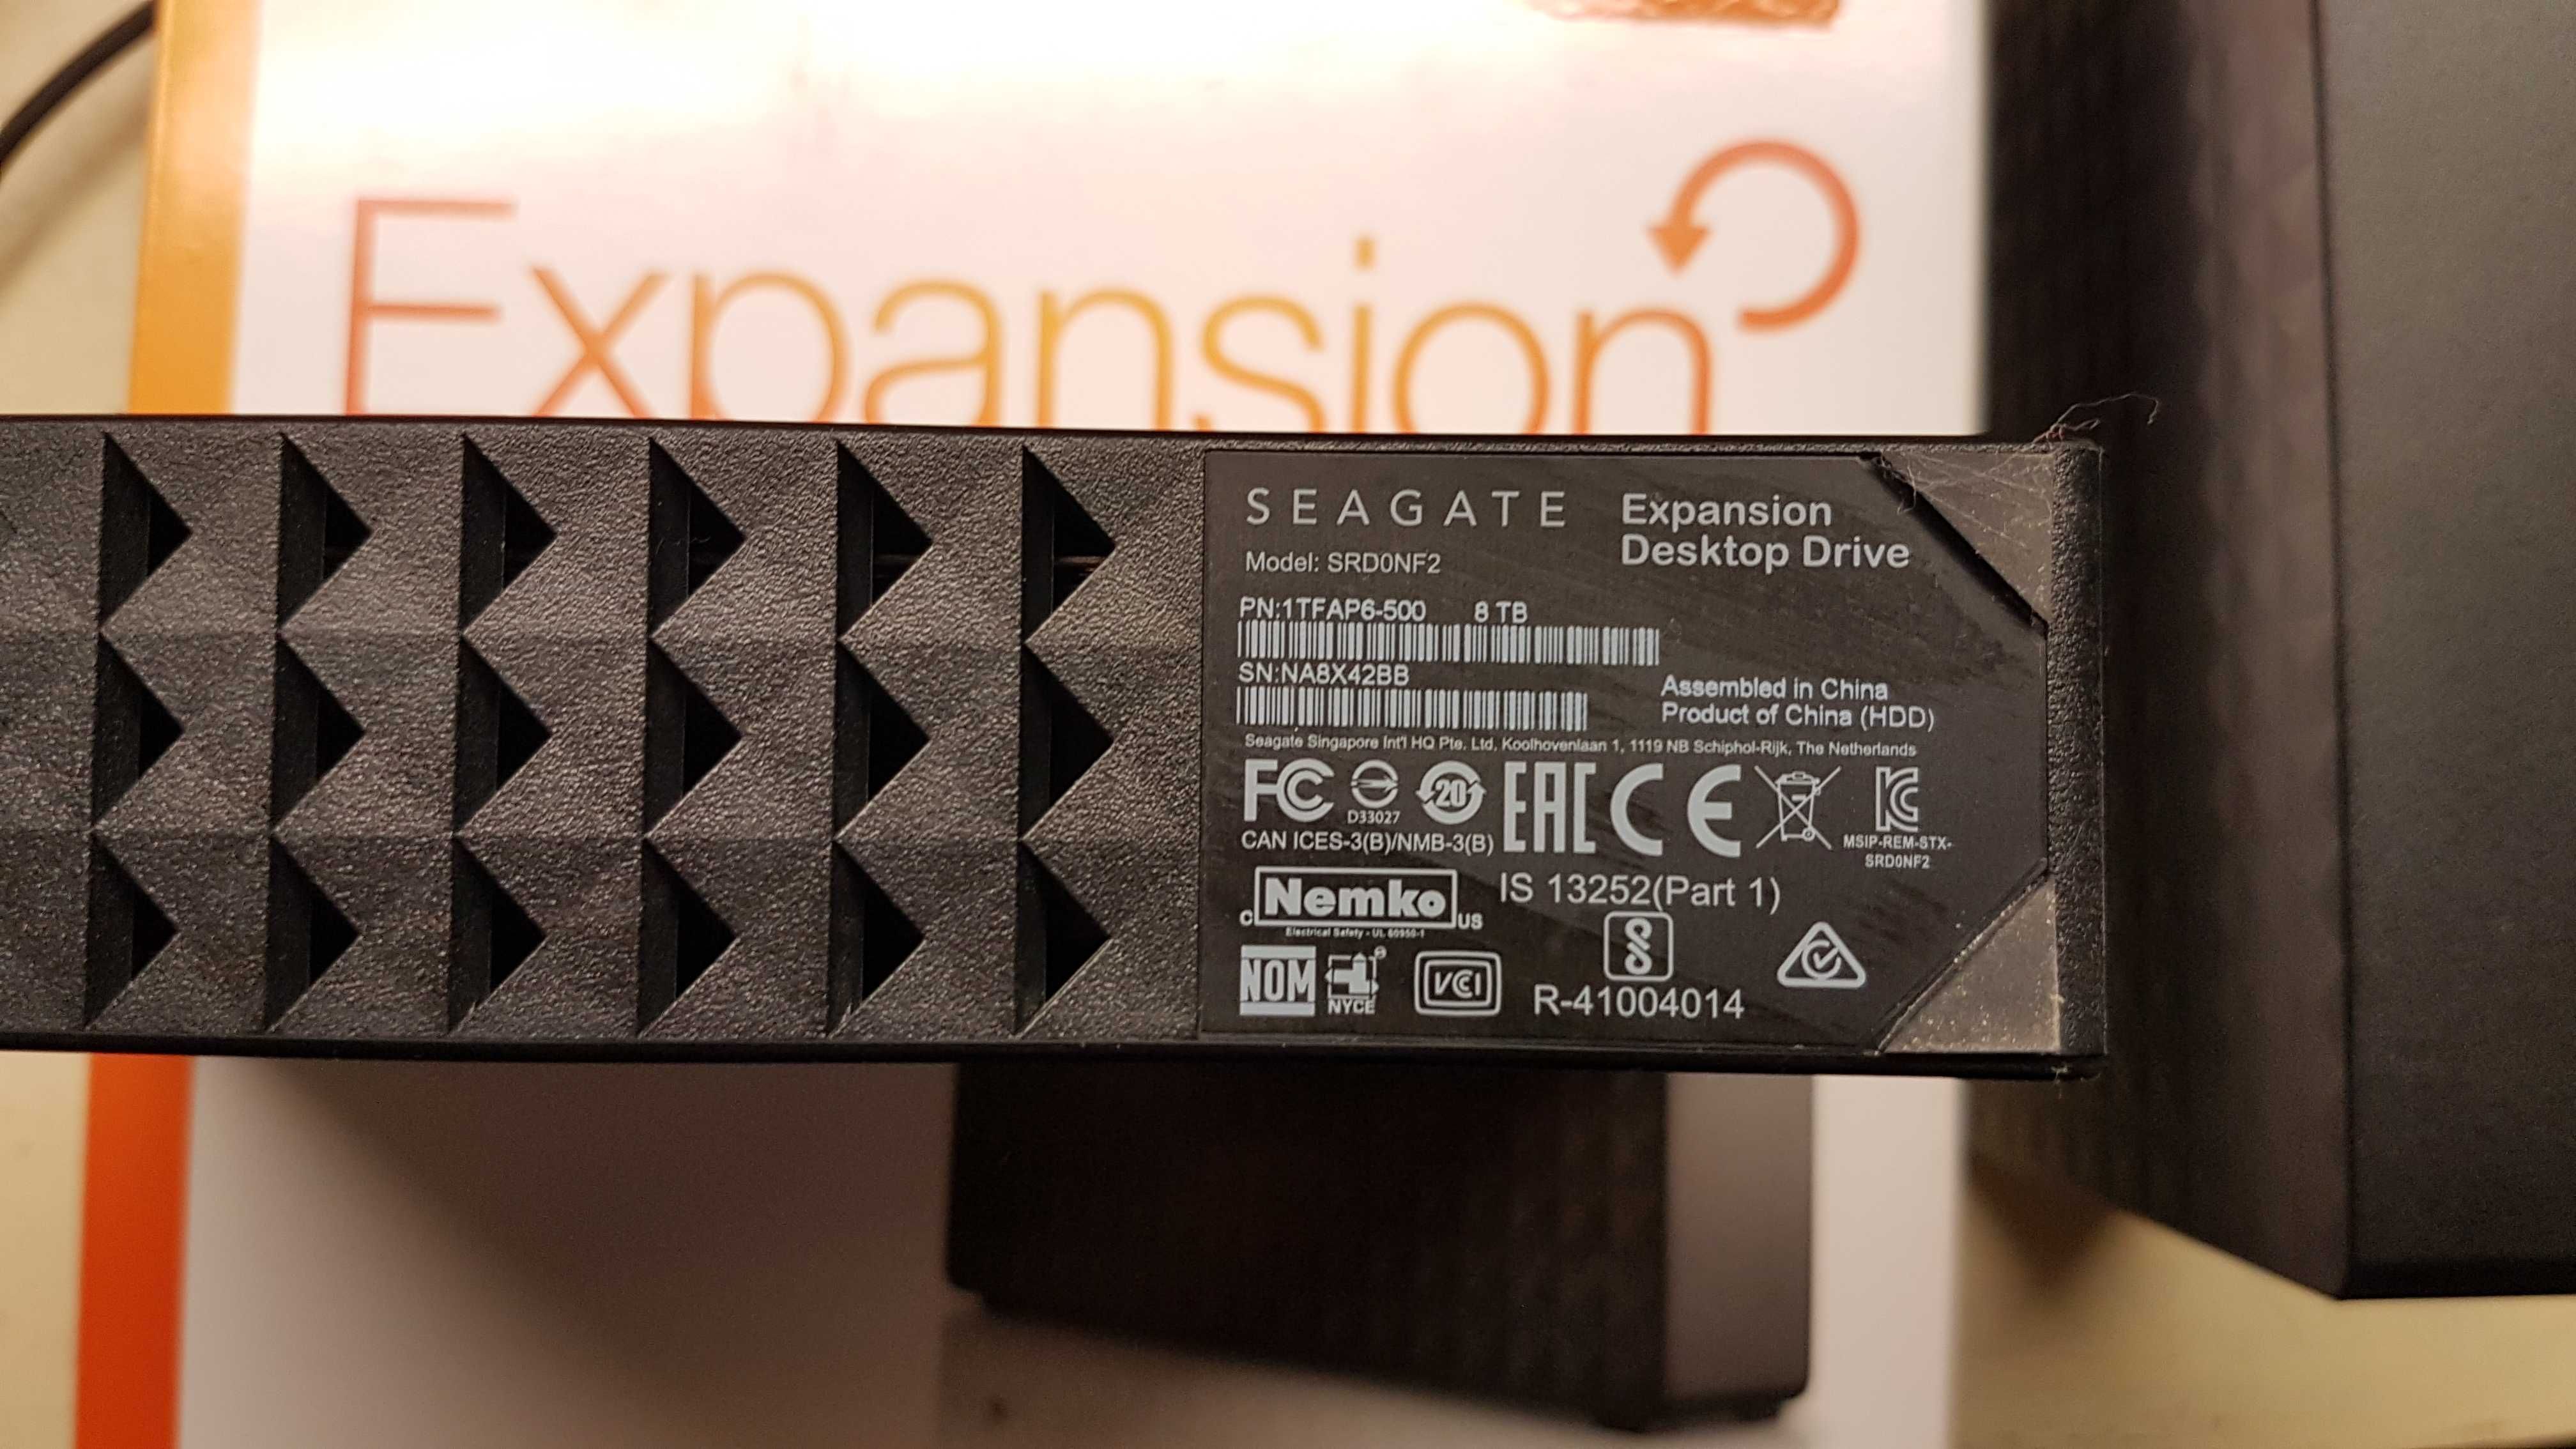 Xард диска Seagate Expansion 8TB (Външен)